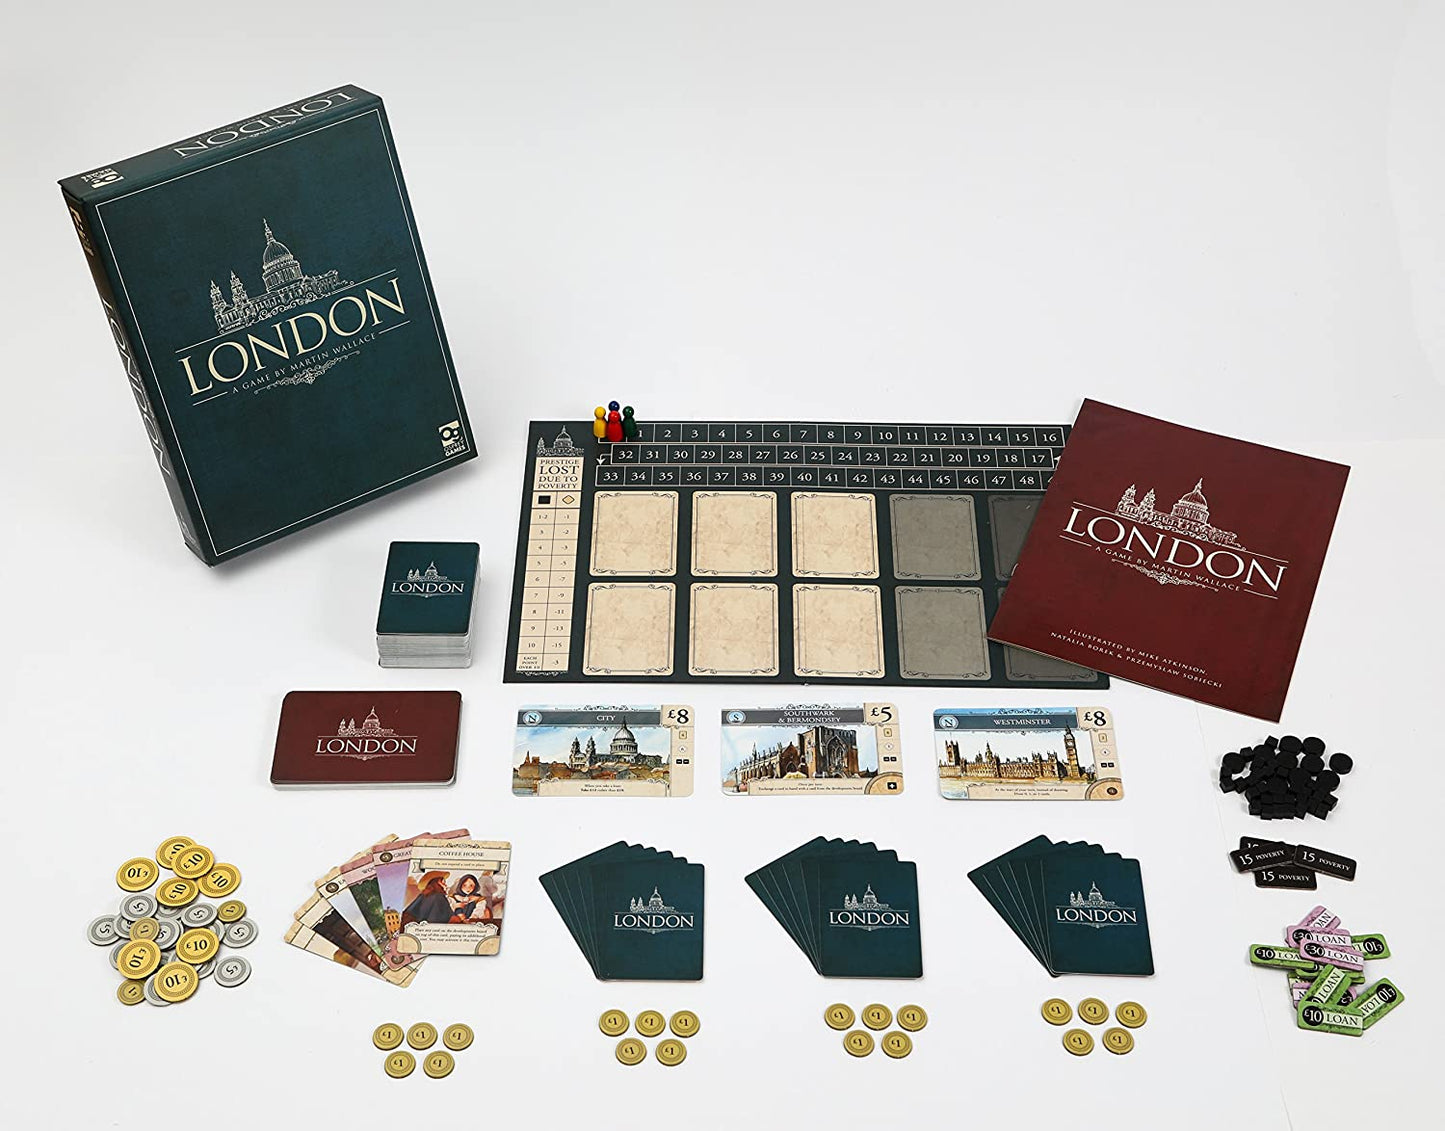 London (2nd Edition) Osprey Games